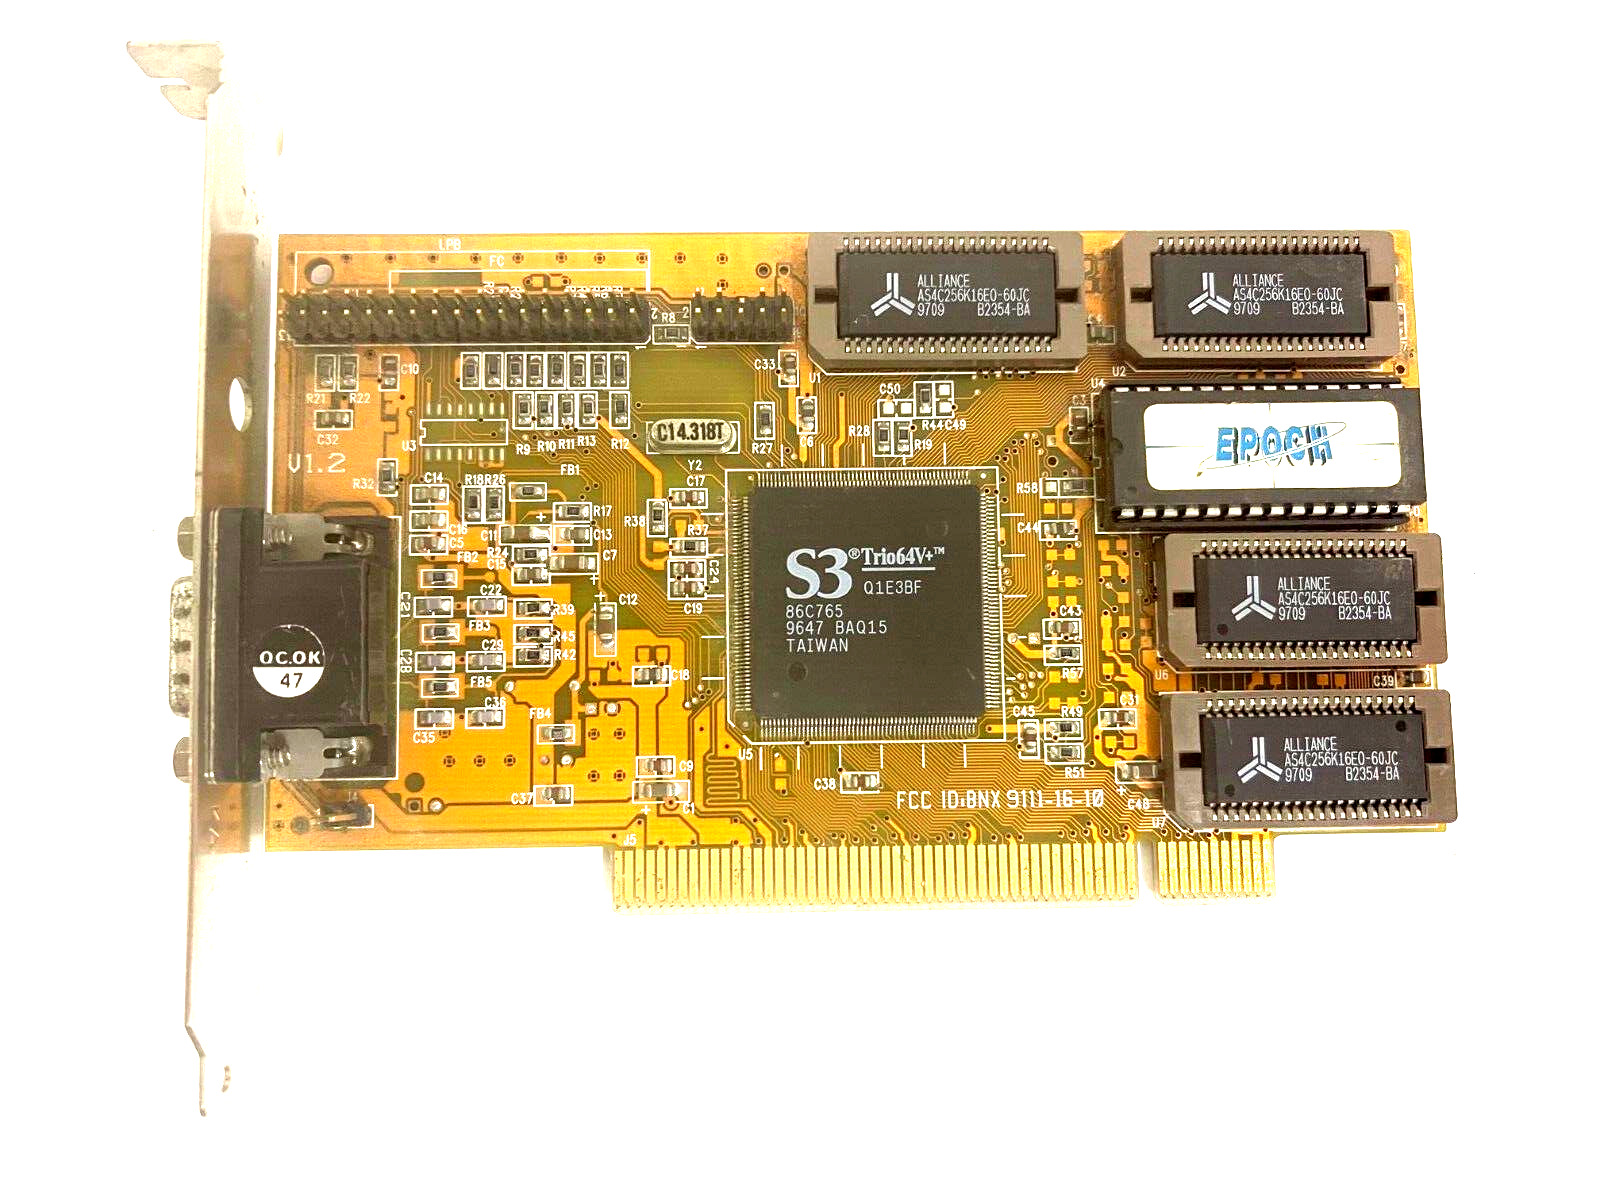 VINTAGE 1996 VIDEO TECHNOLOGY COMPUTERS S3 TRIO64V+ PCI 2 MEG VGA CARD MXB131